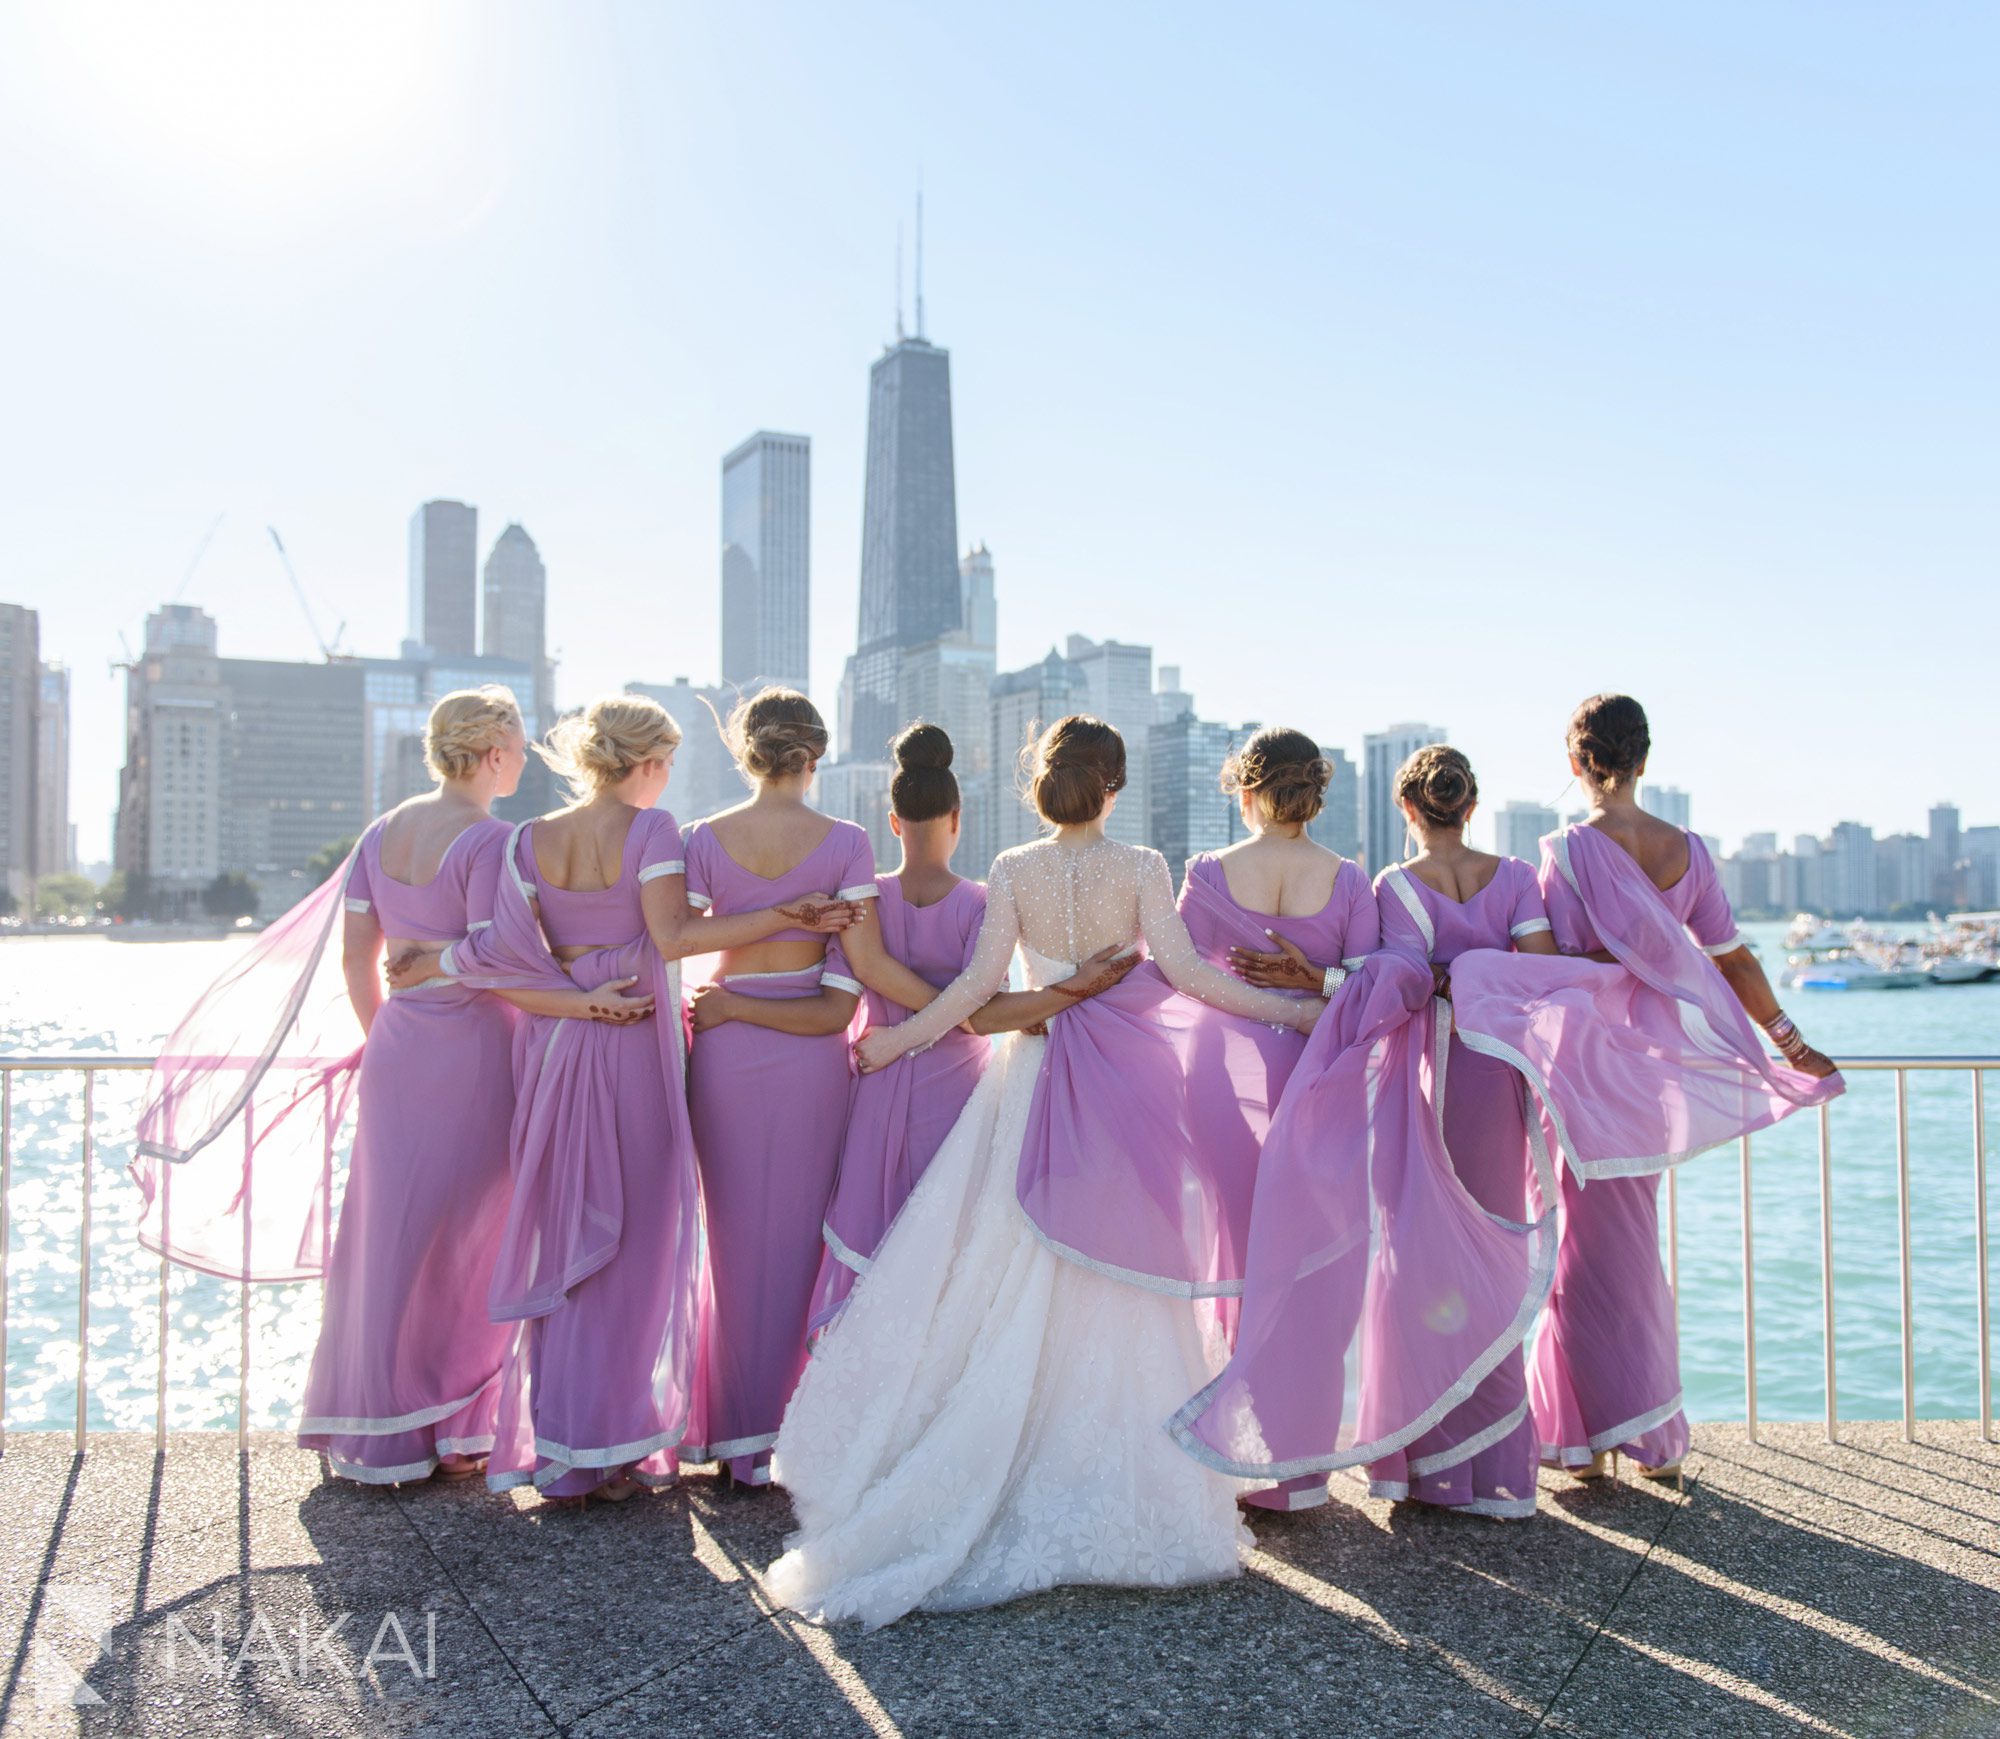 olive park wedding photographer Chicago skyline